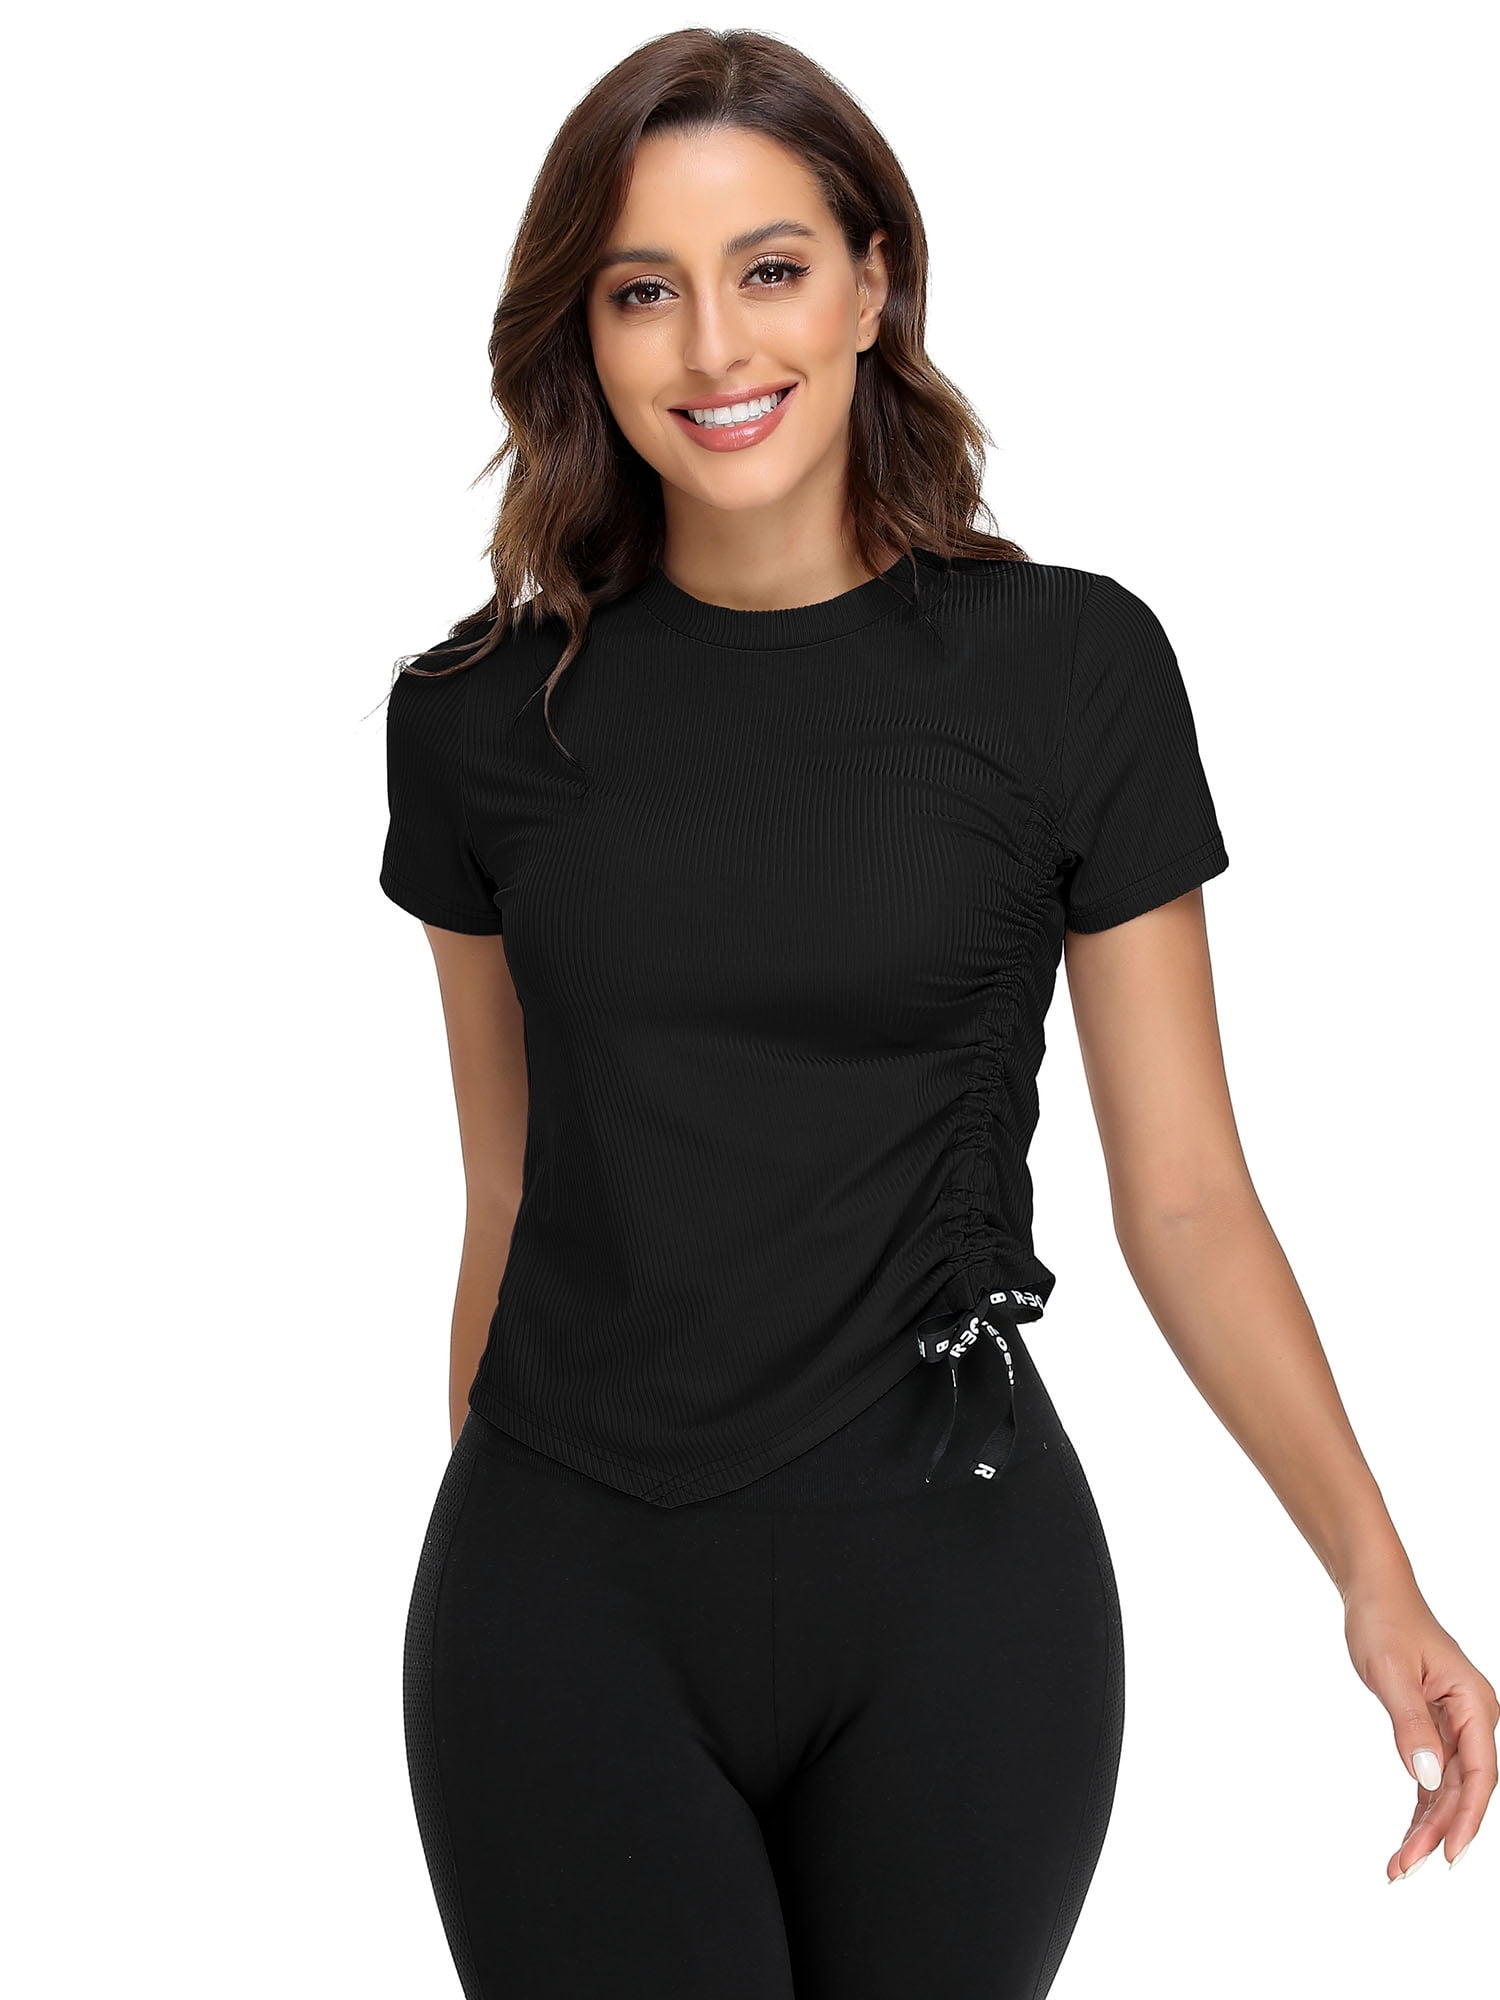 BeautyIn Women's Workout Shirts Drawstring Hem Fitted Top Short Sleeve Yoga  Running tanks